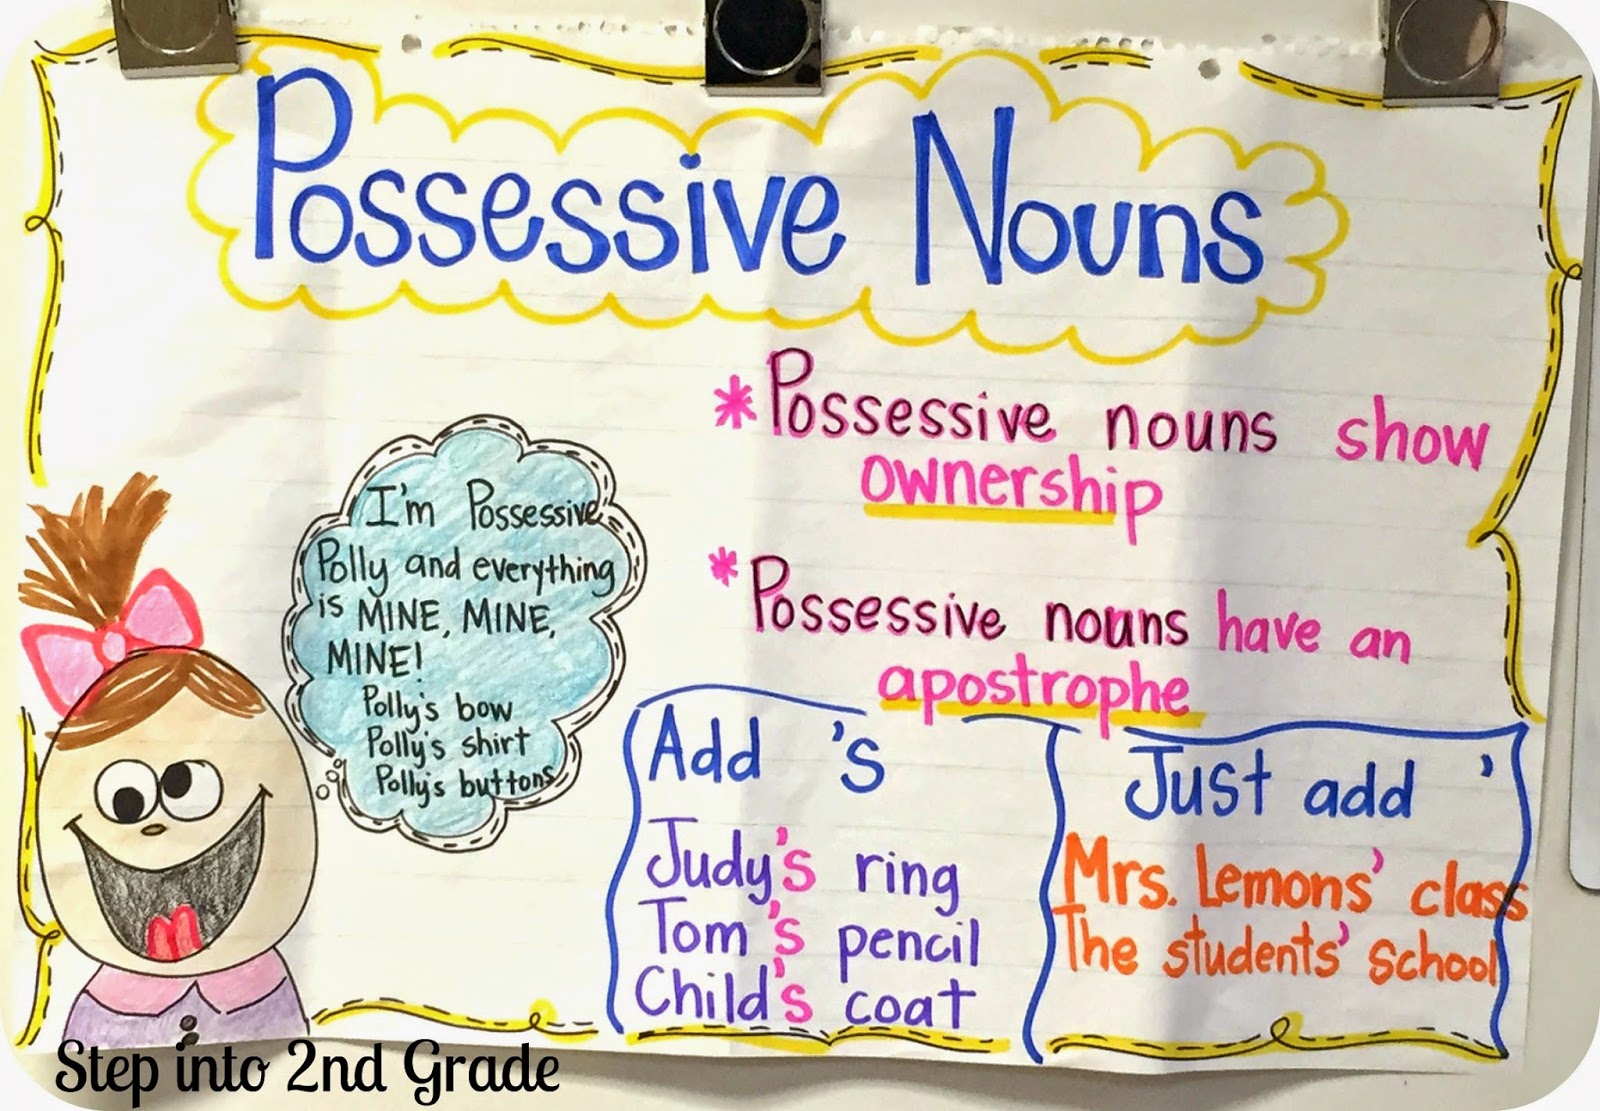 Possessive Nouns | Step into 2nd Grade with Mrs. Lemons | Bloglovin'